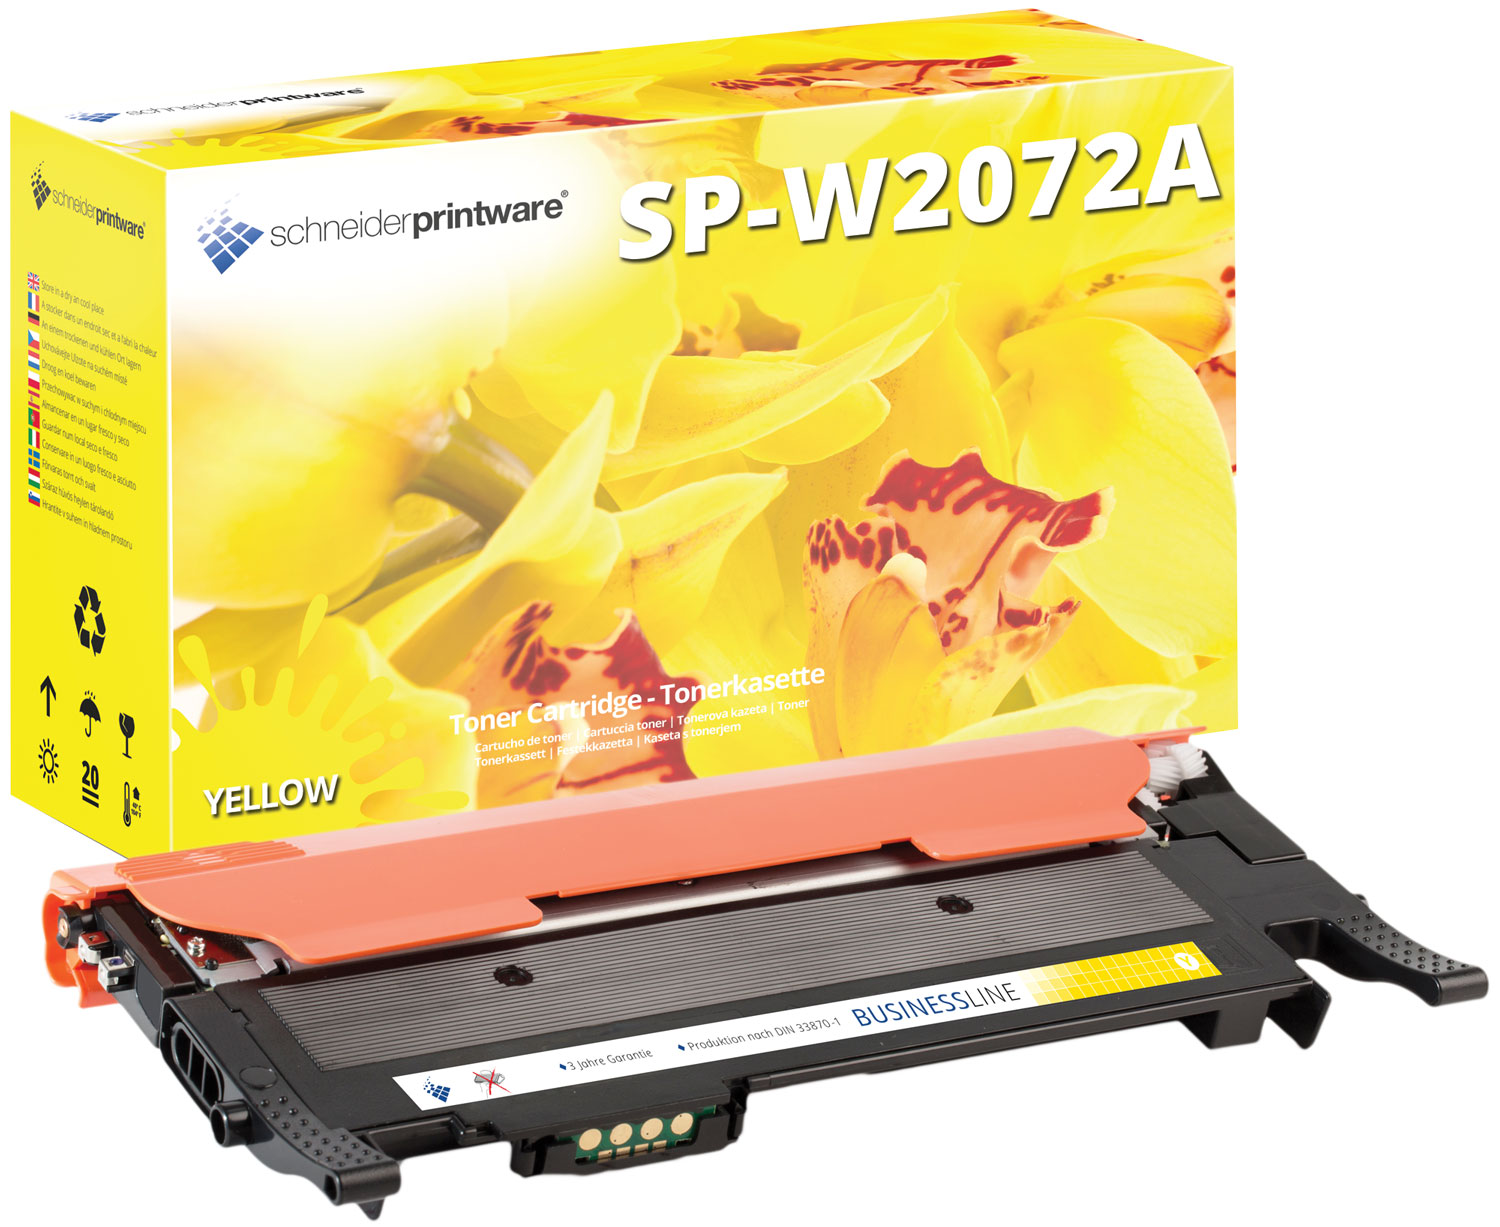 Schneiderprintware Toner ersetzt HP W2072A Yellow